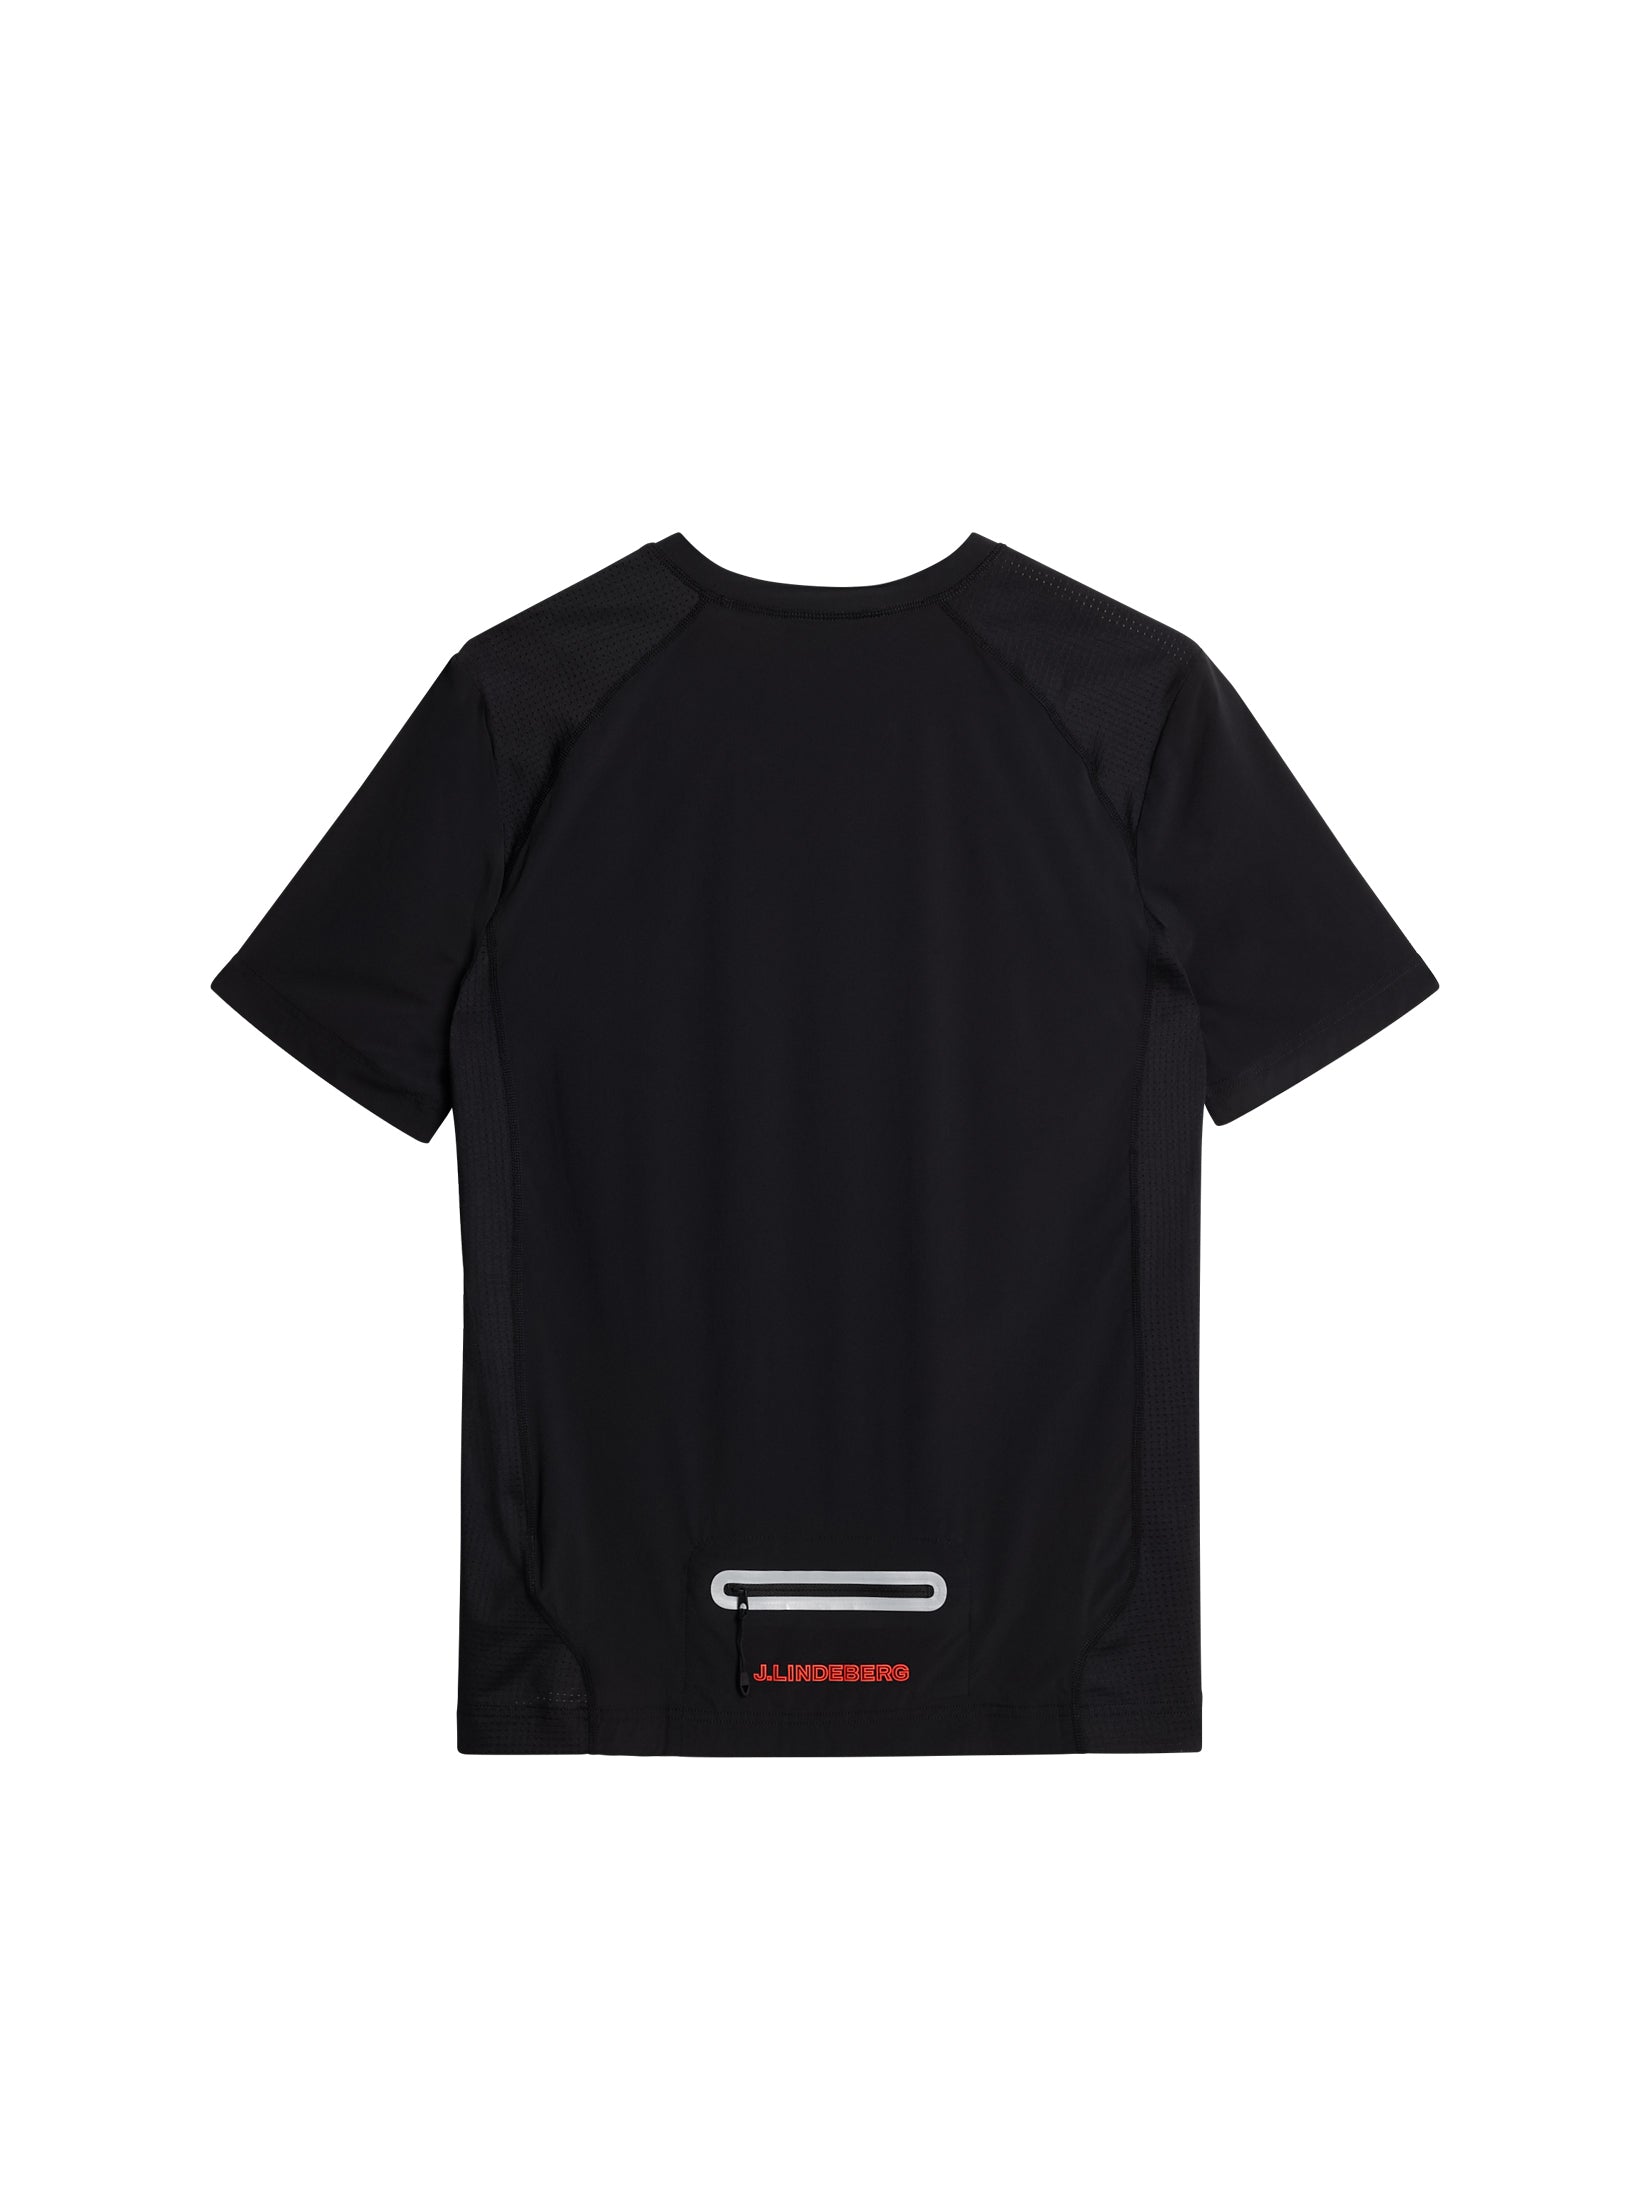 Tomas Pro Pack T-Shirt